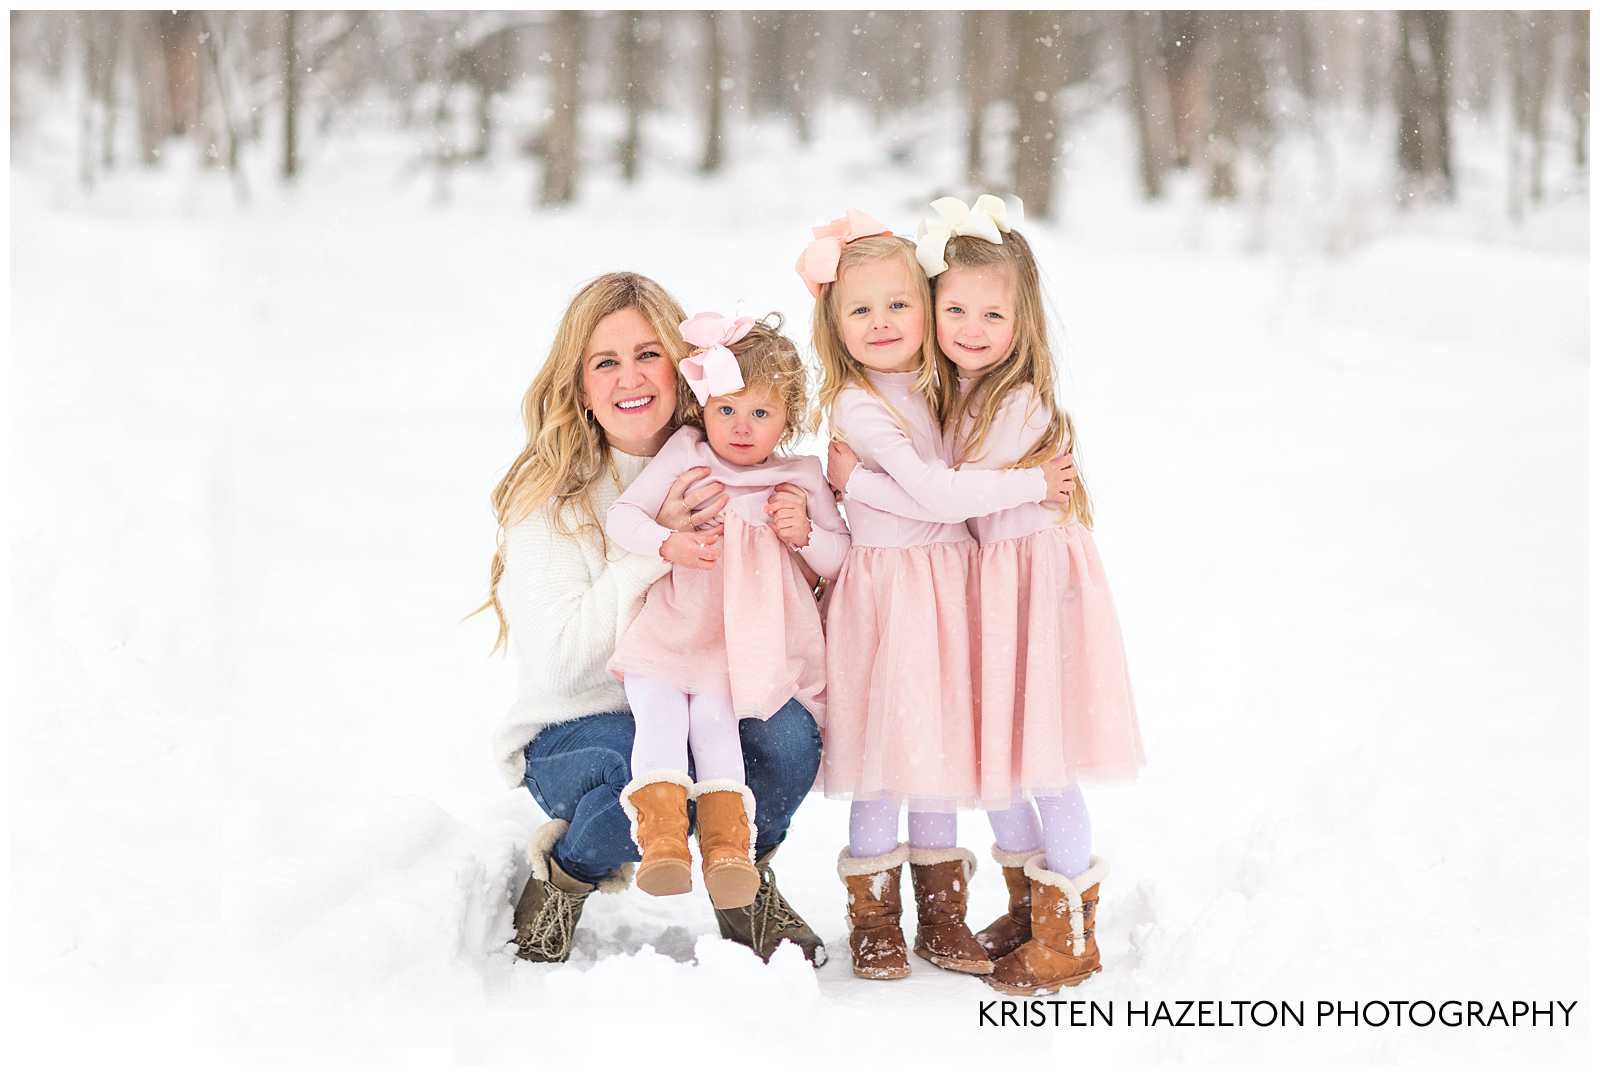 Mom and daughters at a snowfall photoshoot